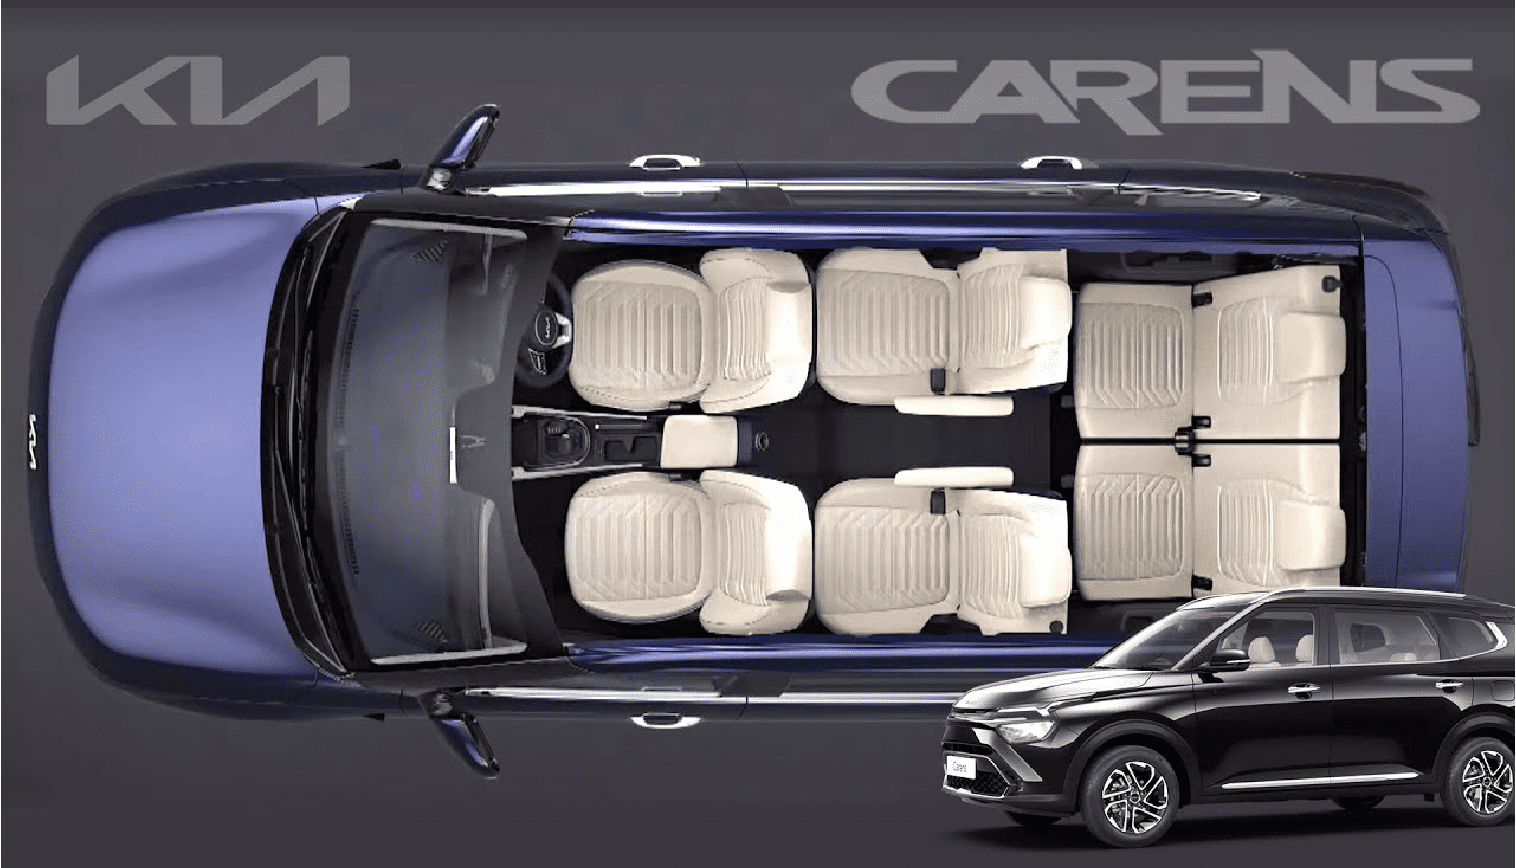 Kia Carens - Variants, Prices, Specs, Overview